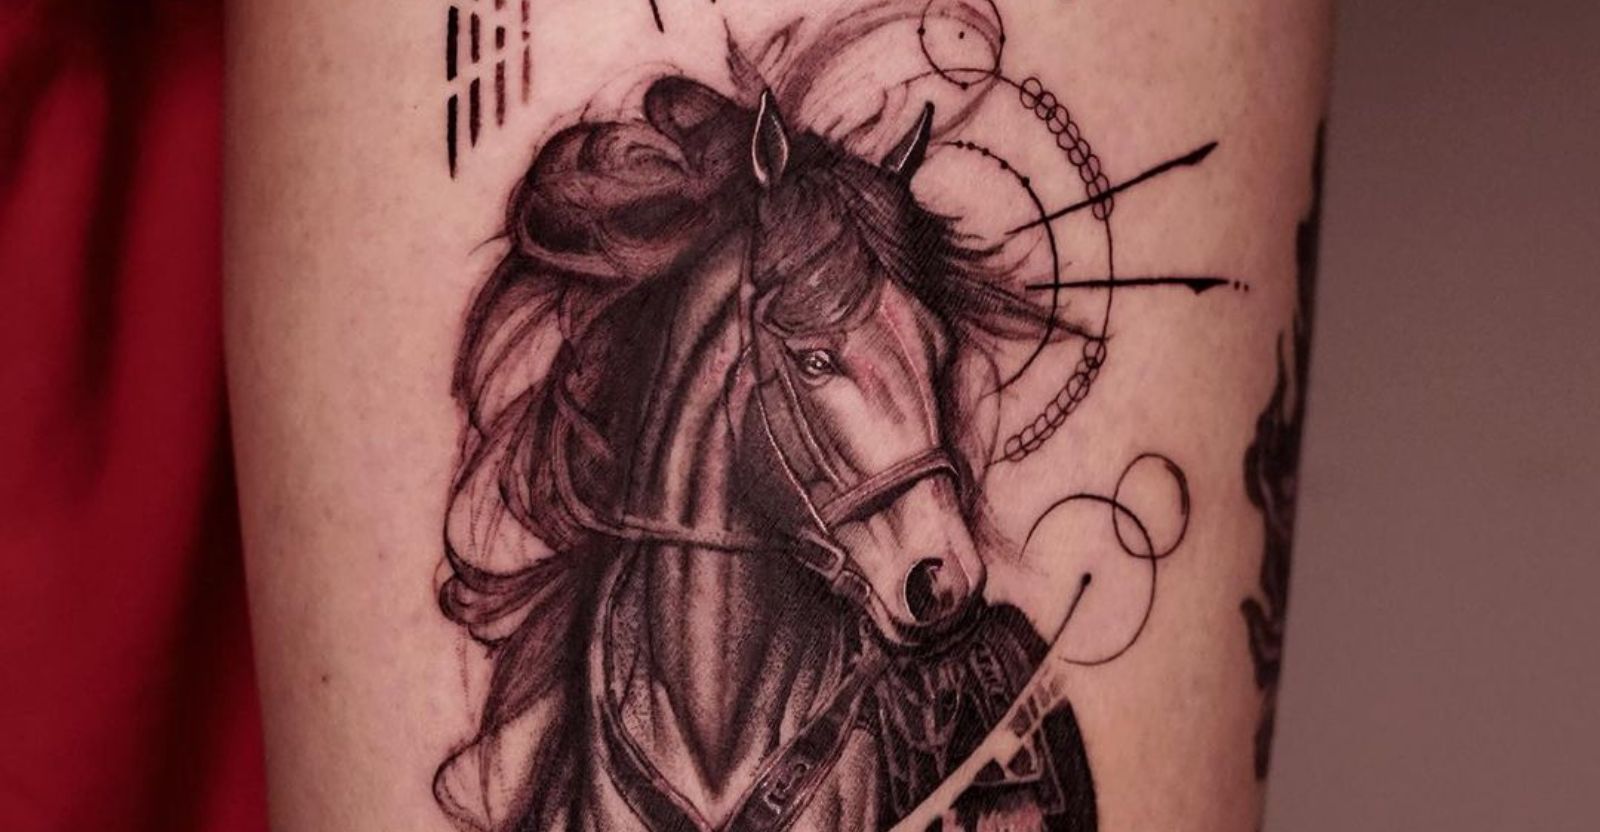 Horse tattoo ideas for men